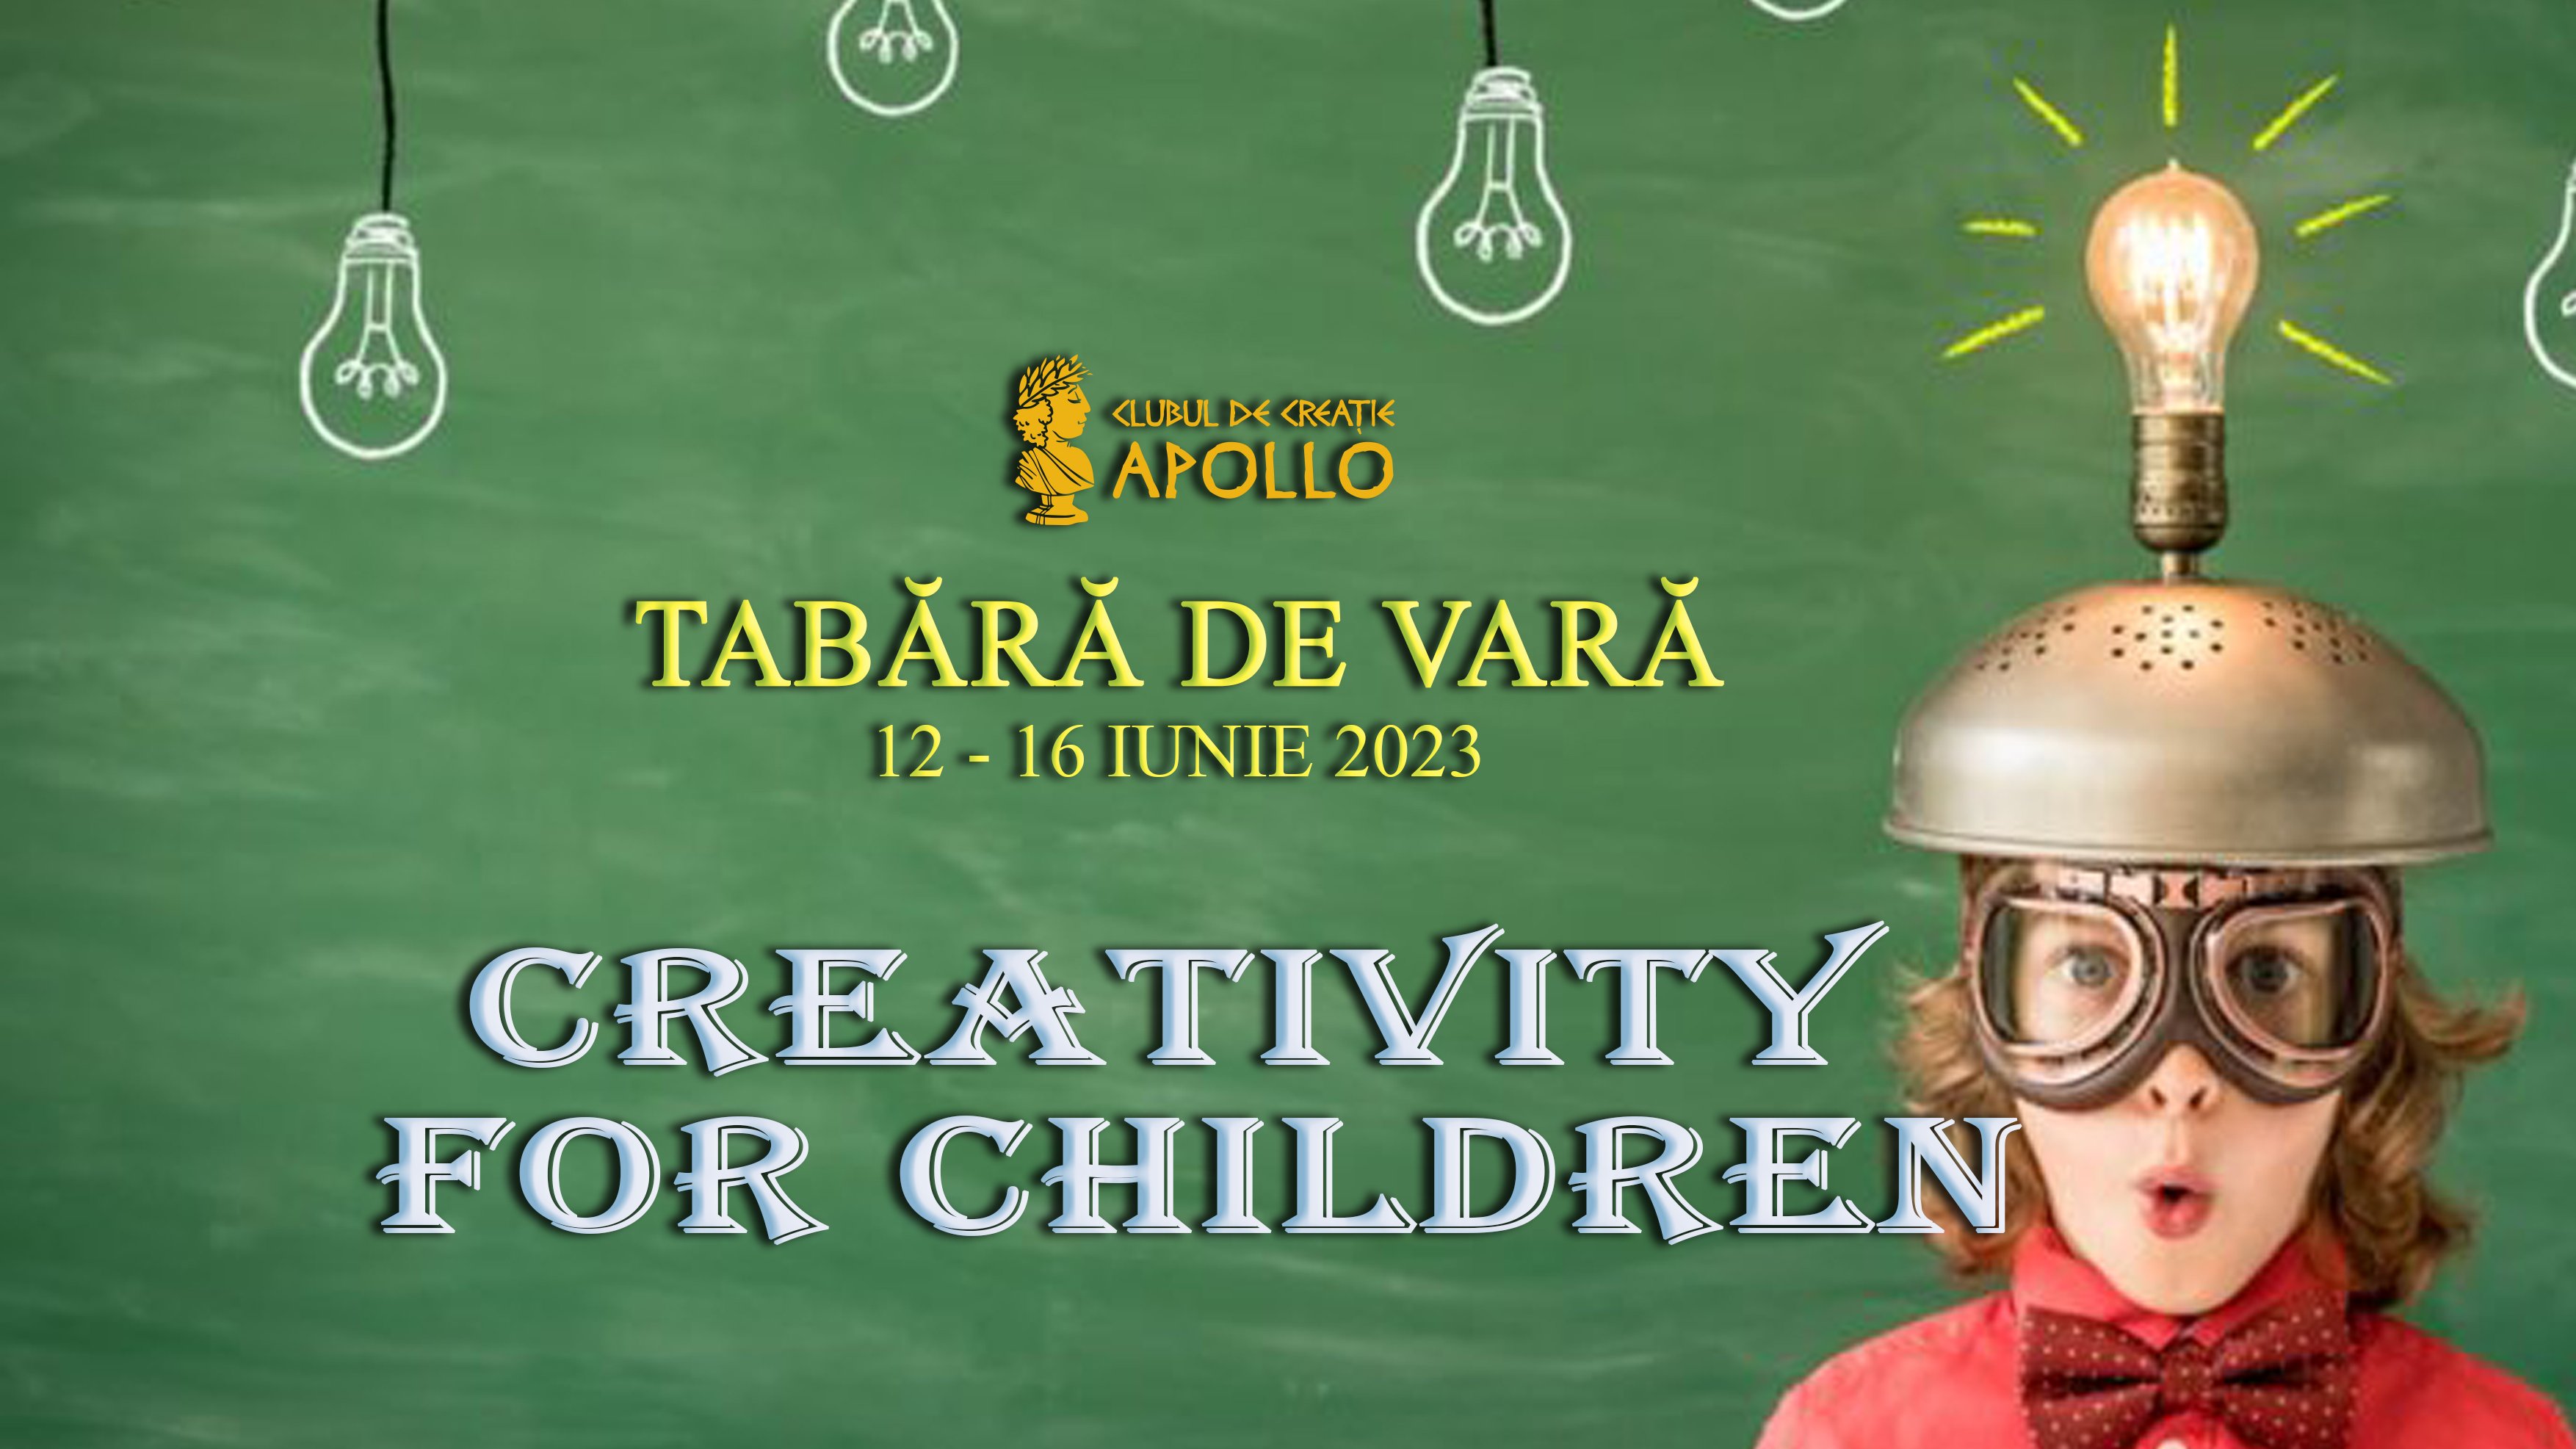 Tabara CREATIVITY FOR CHILDREN